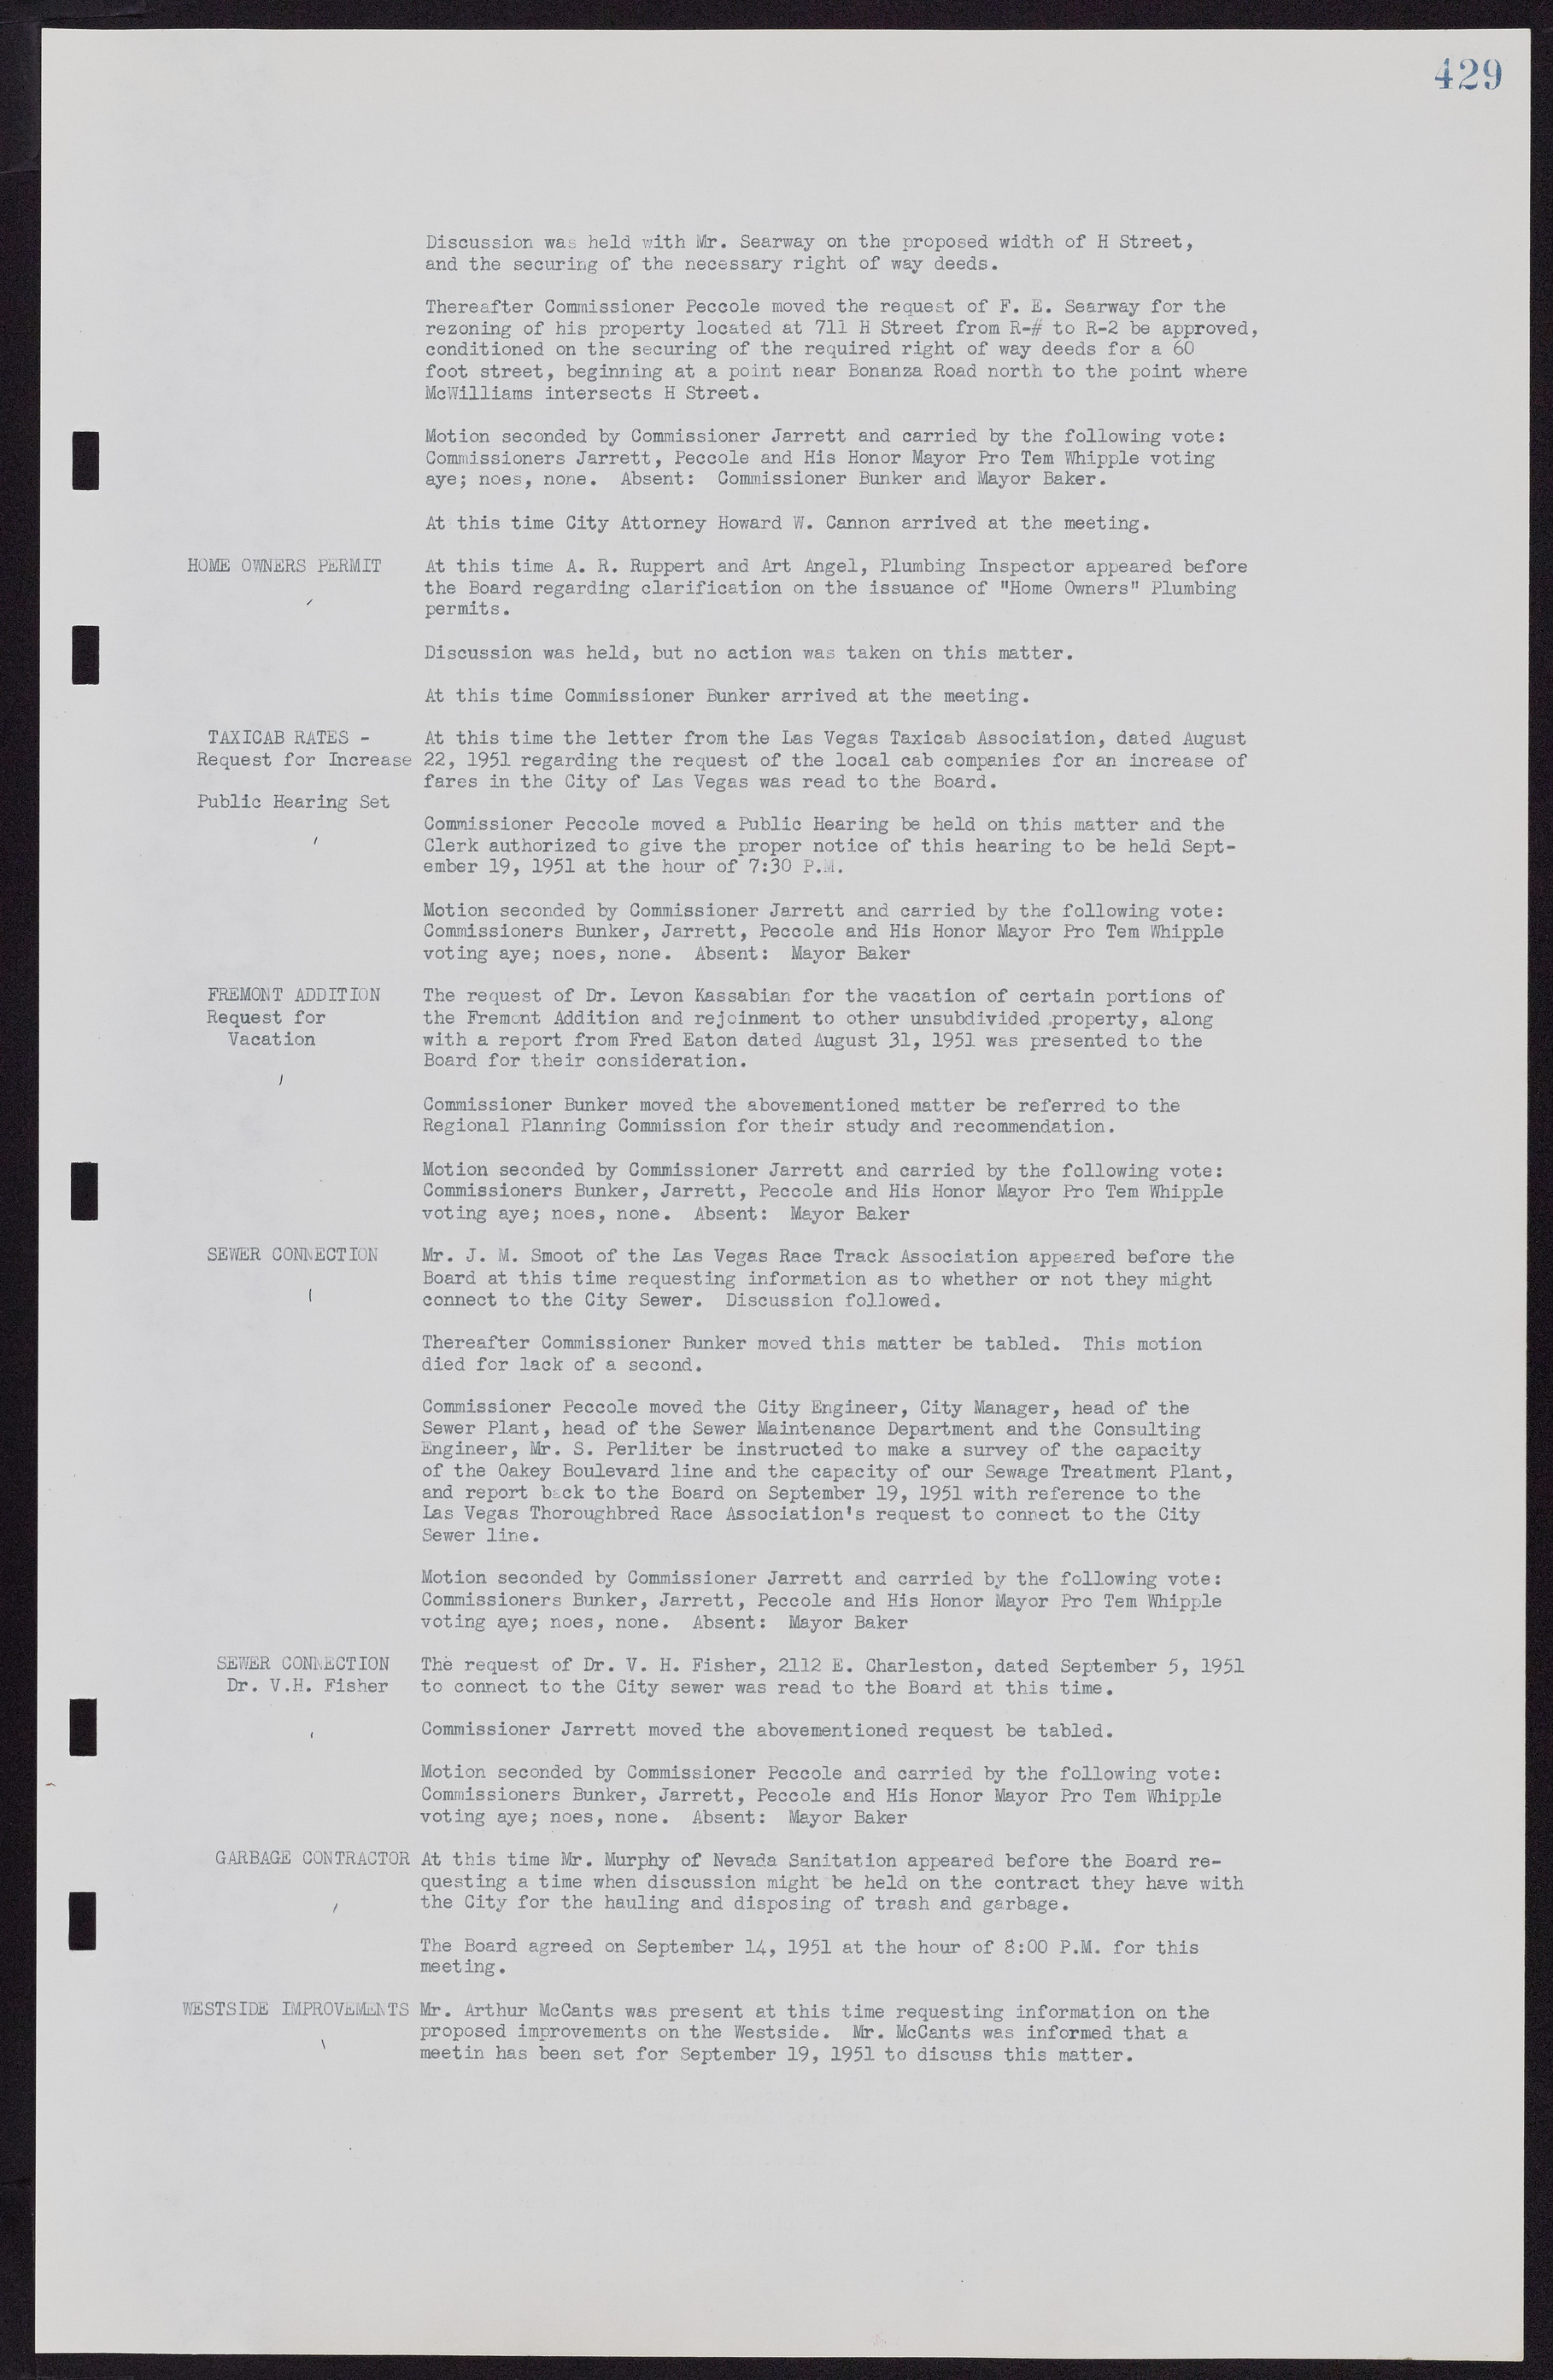 Las Vegas City Commission Minutes, November 7, 1949 to May 21, 1952, lvc000007-445